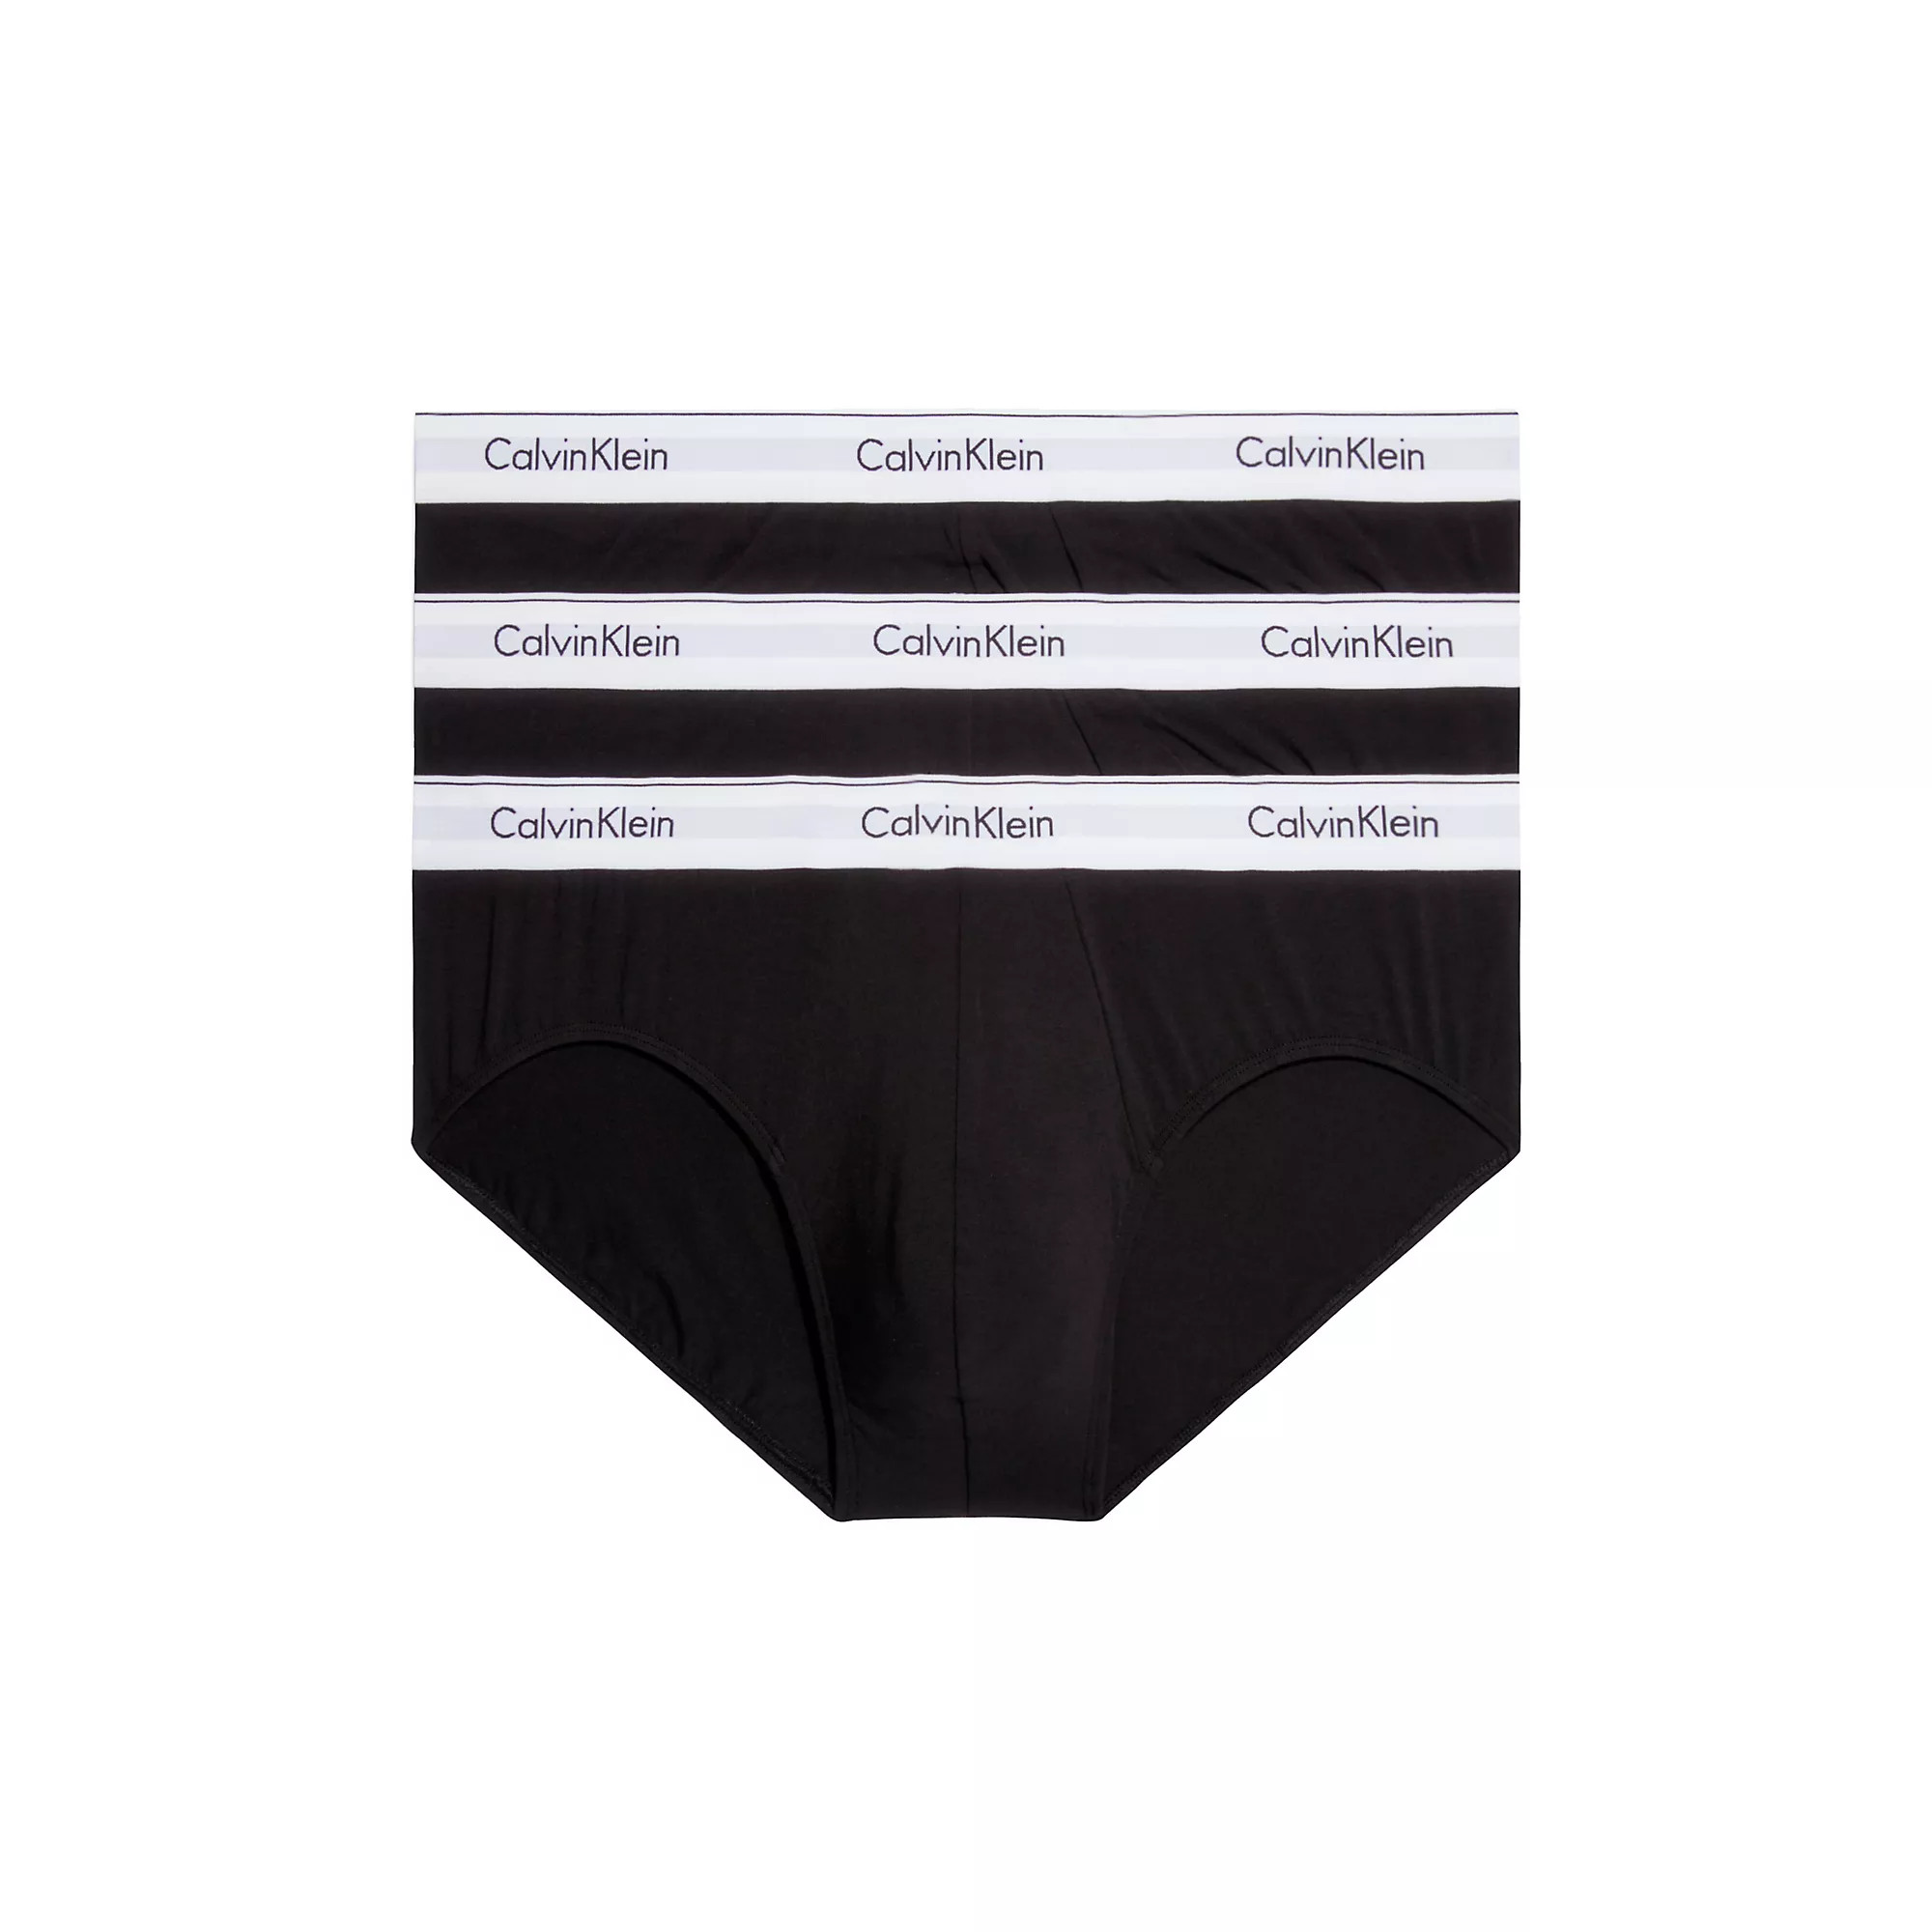 Pánské spodní prádlo HIP BRIEF 3PK 000NB2379A001 - Calvin Klein S